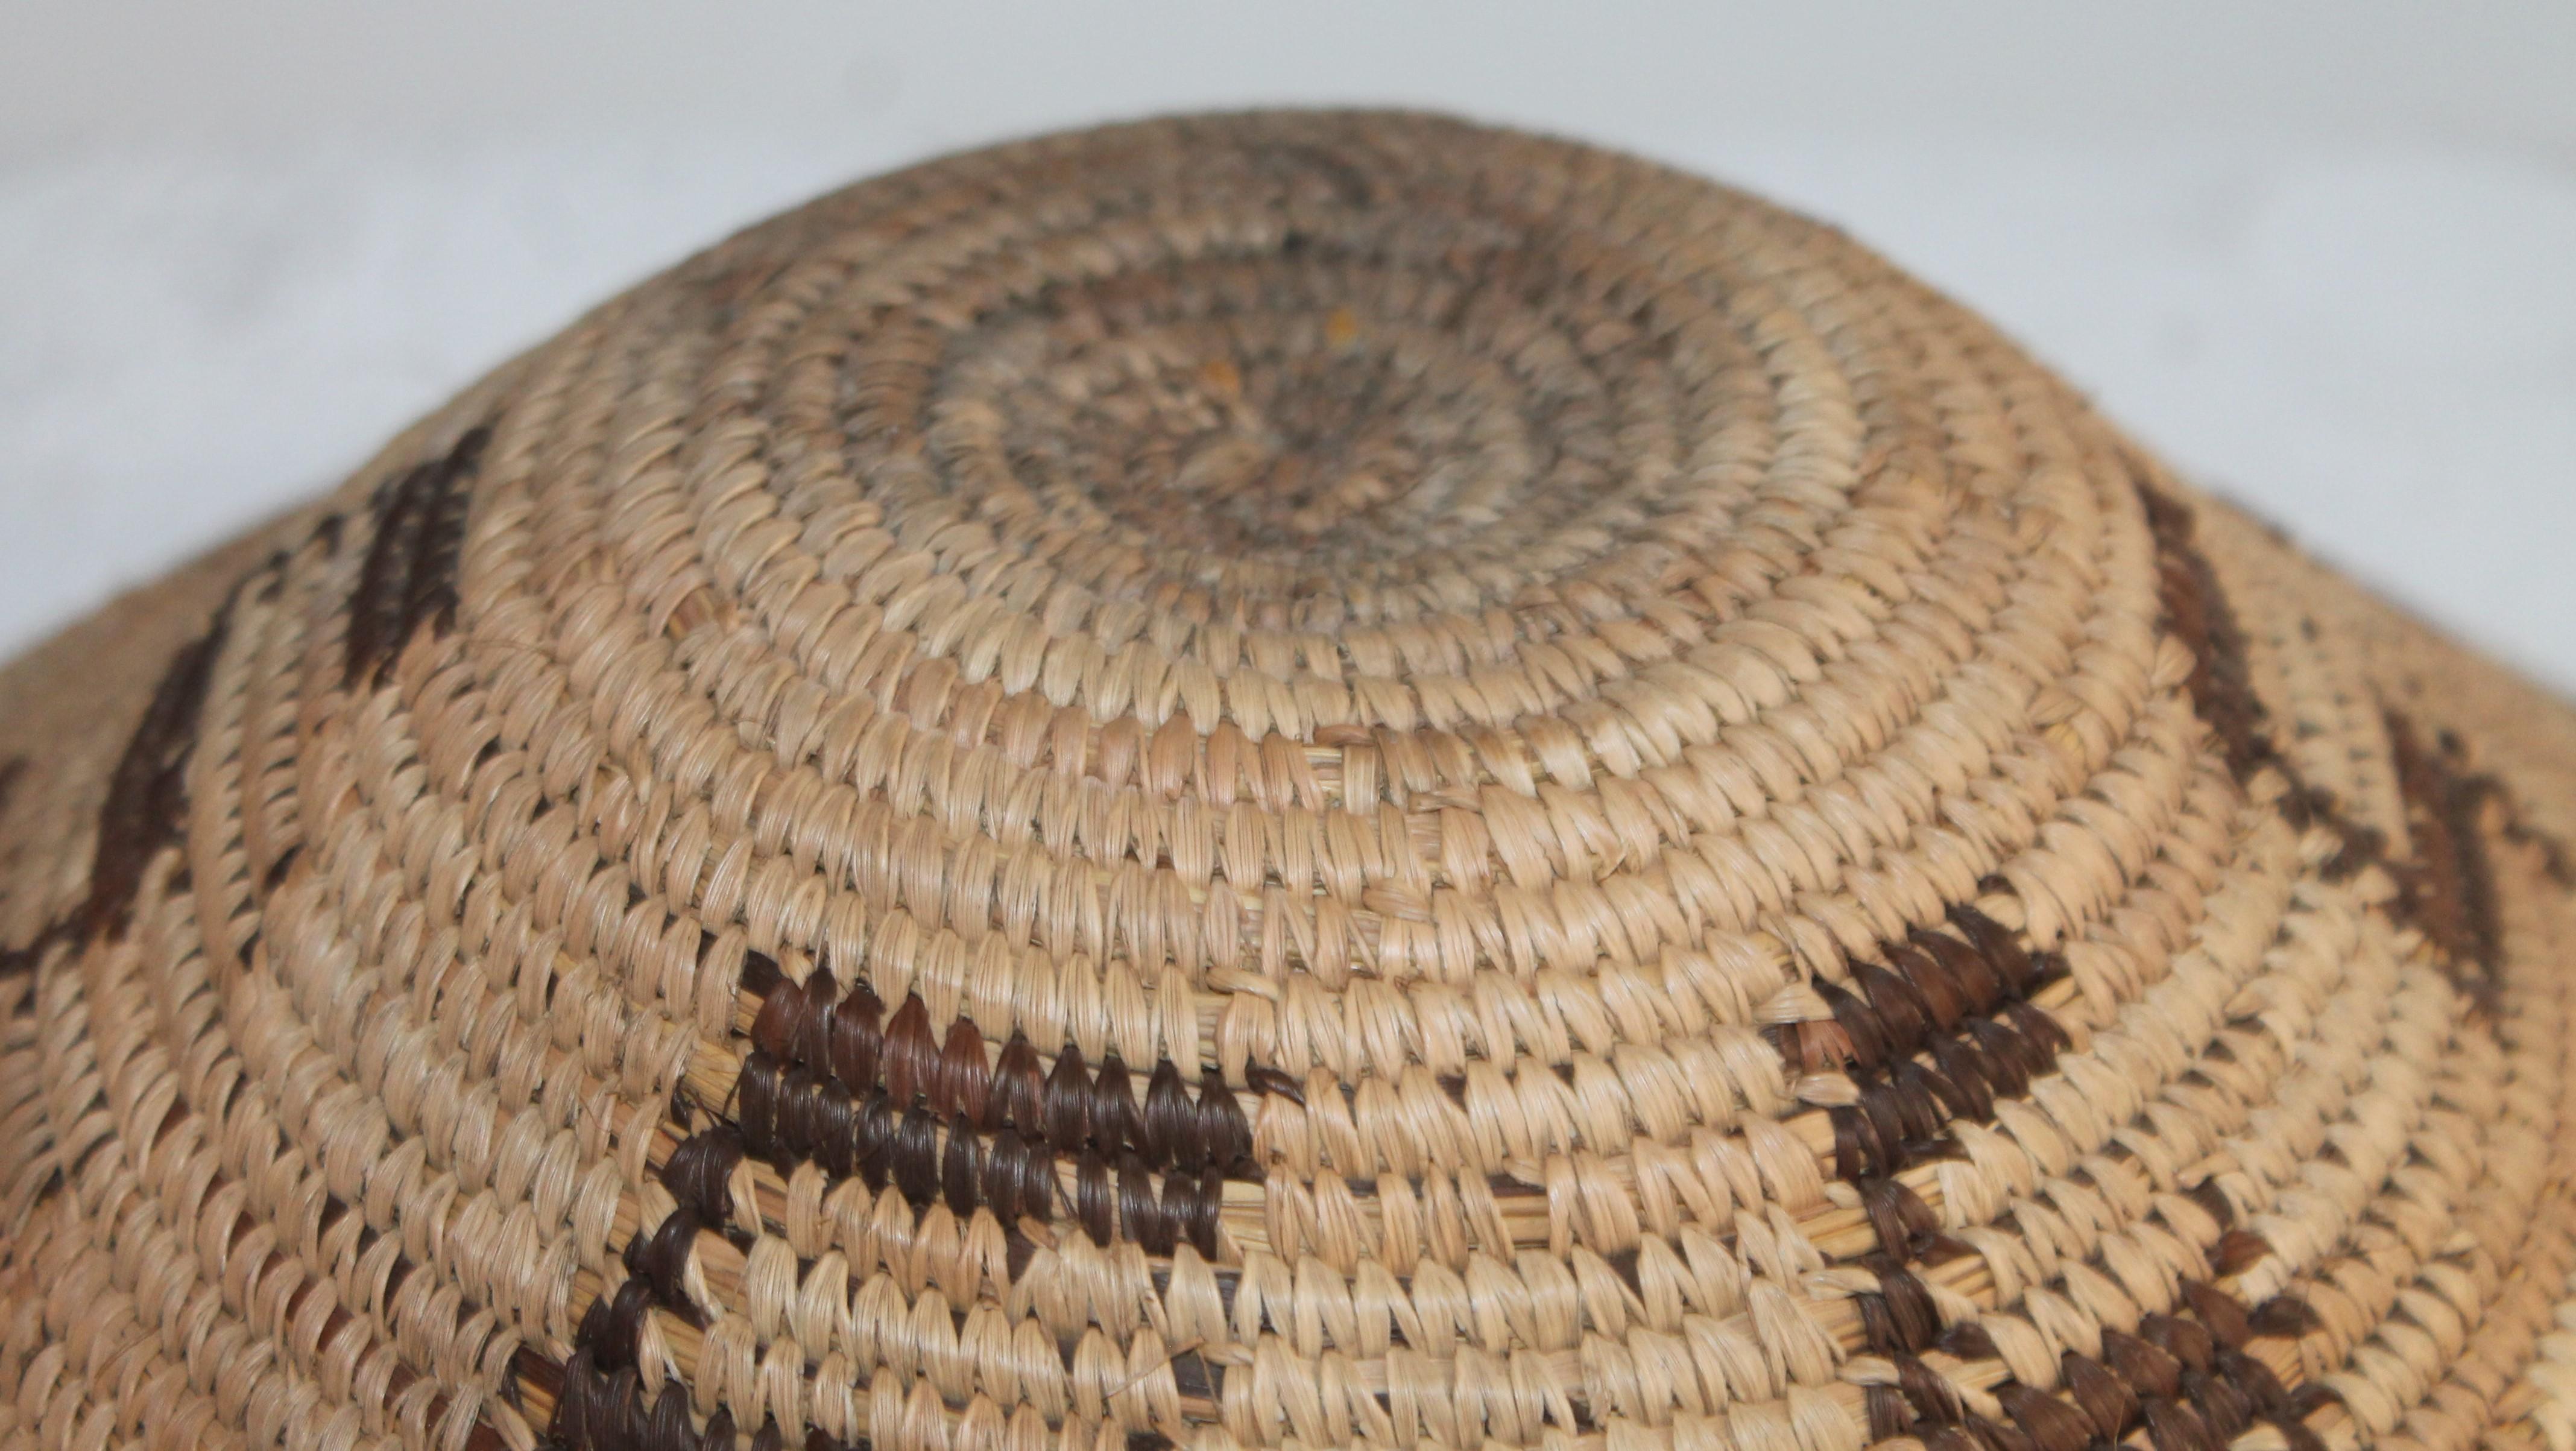 Hand-Woven Native American Indian Basket, Papago